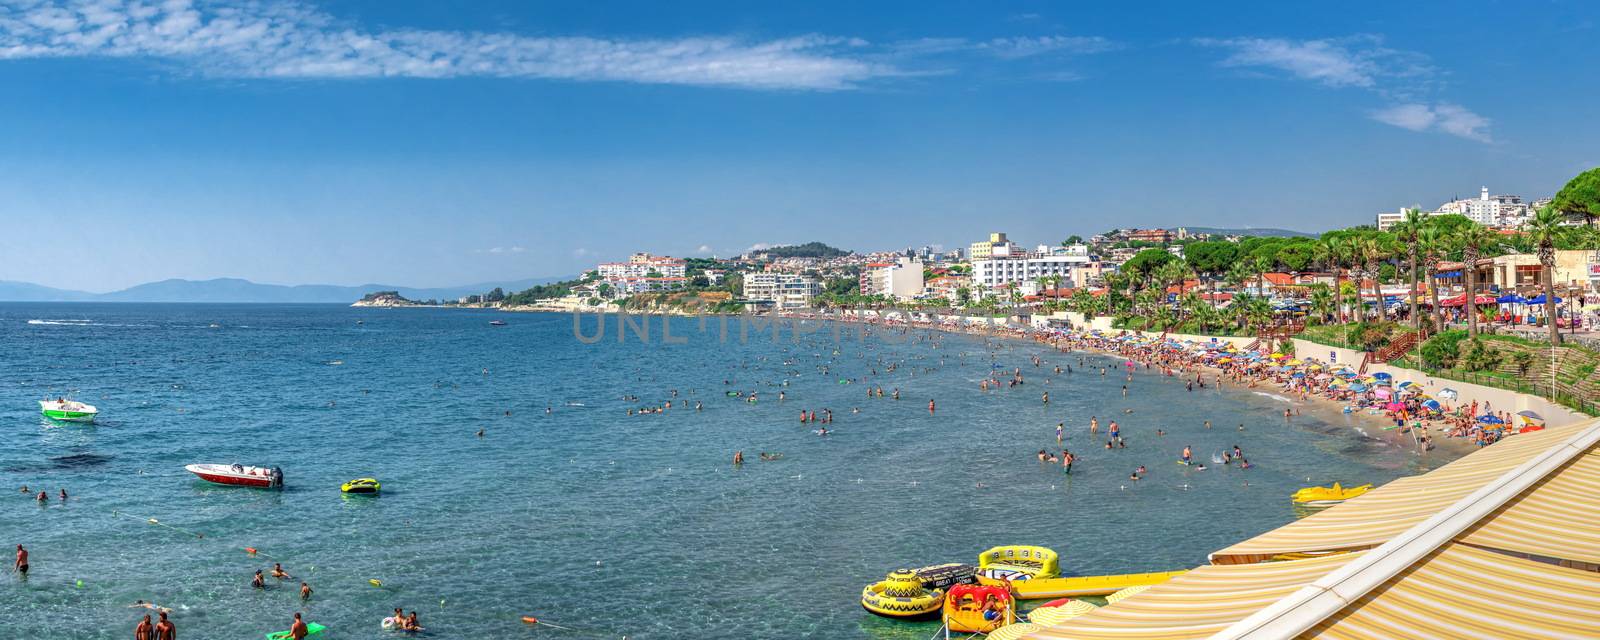 Ladies Beach in Kusadasi, Turkey by Multipedia